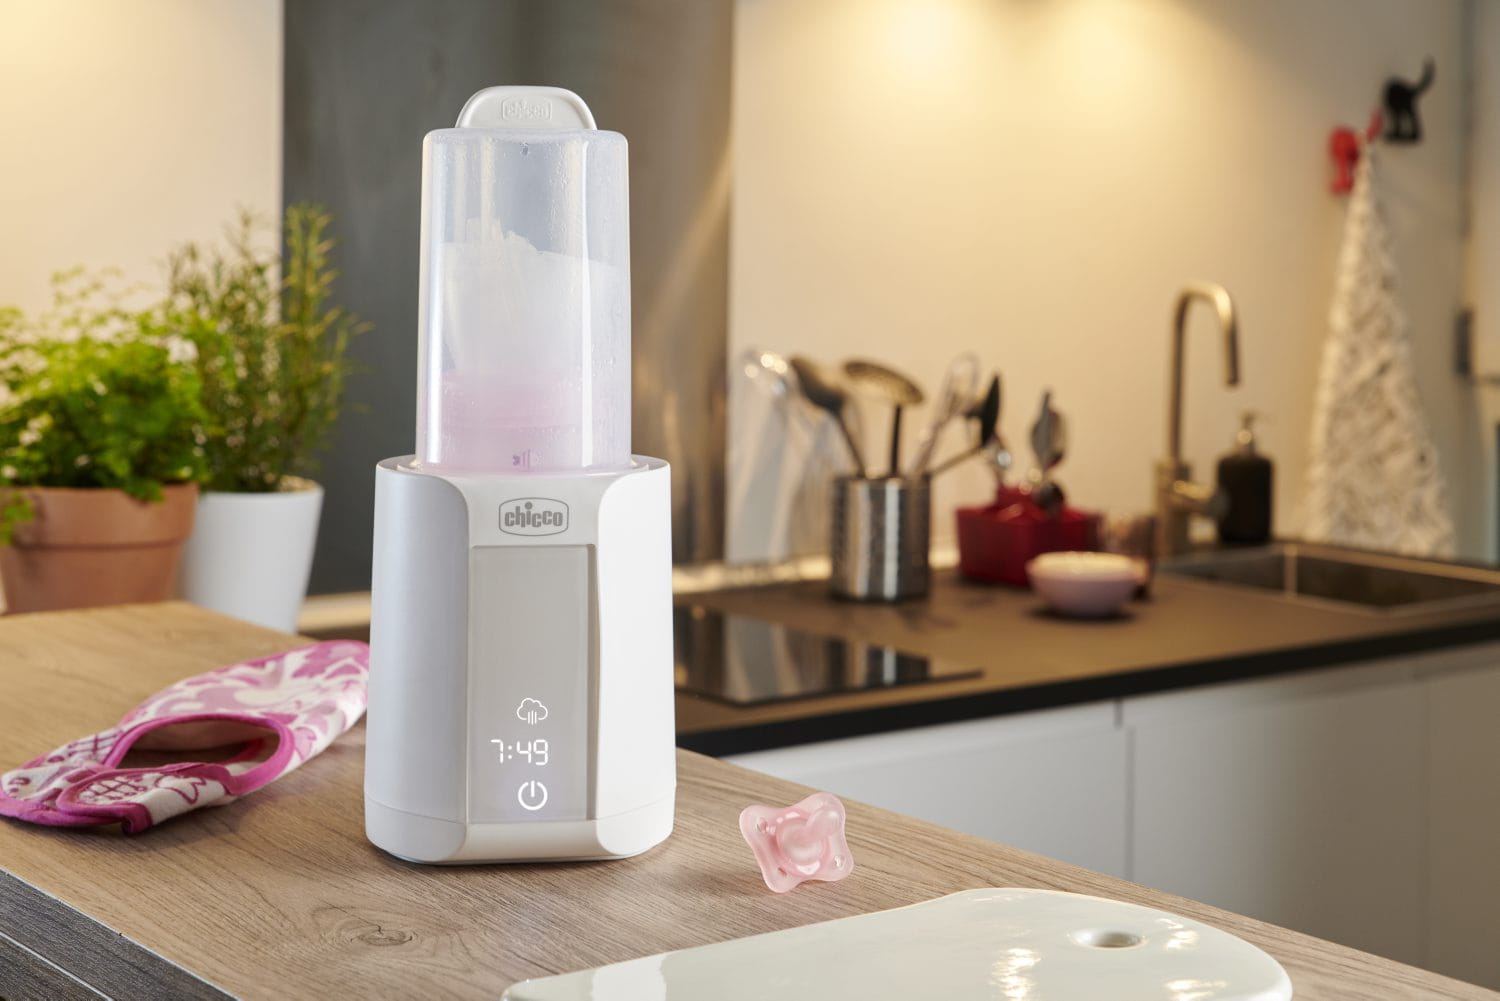 Chicco 4-in-1 Digital Bottle Warmer with Sterilizer for Warming Breastmilk